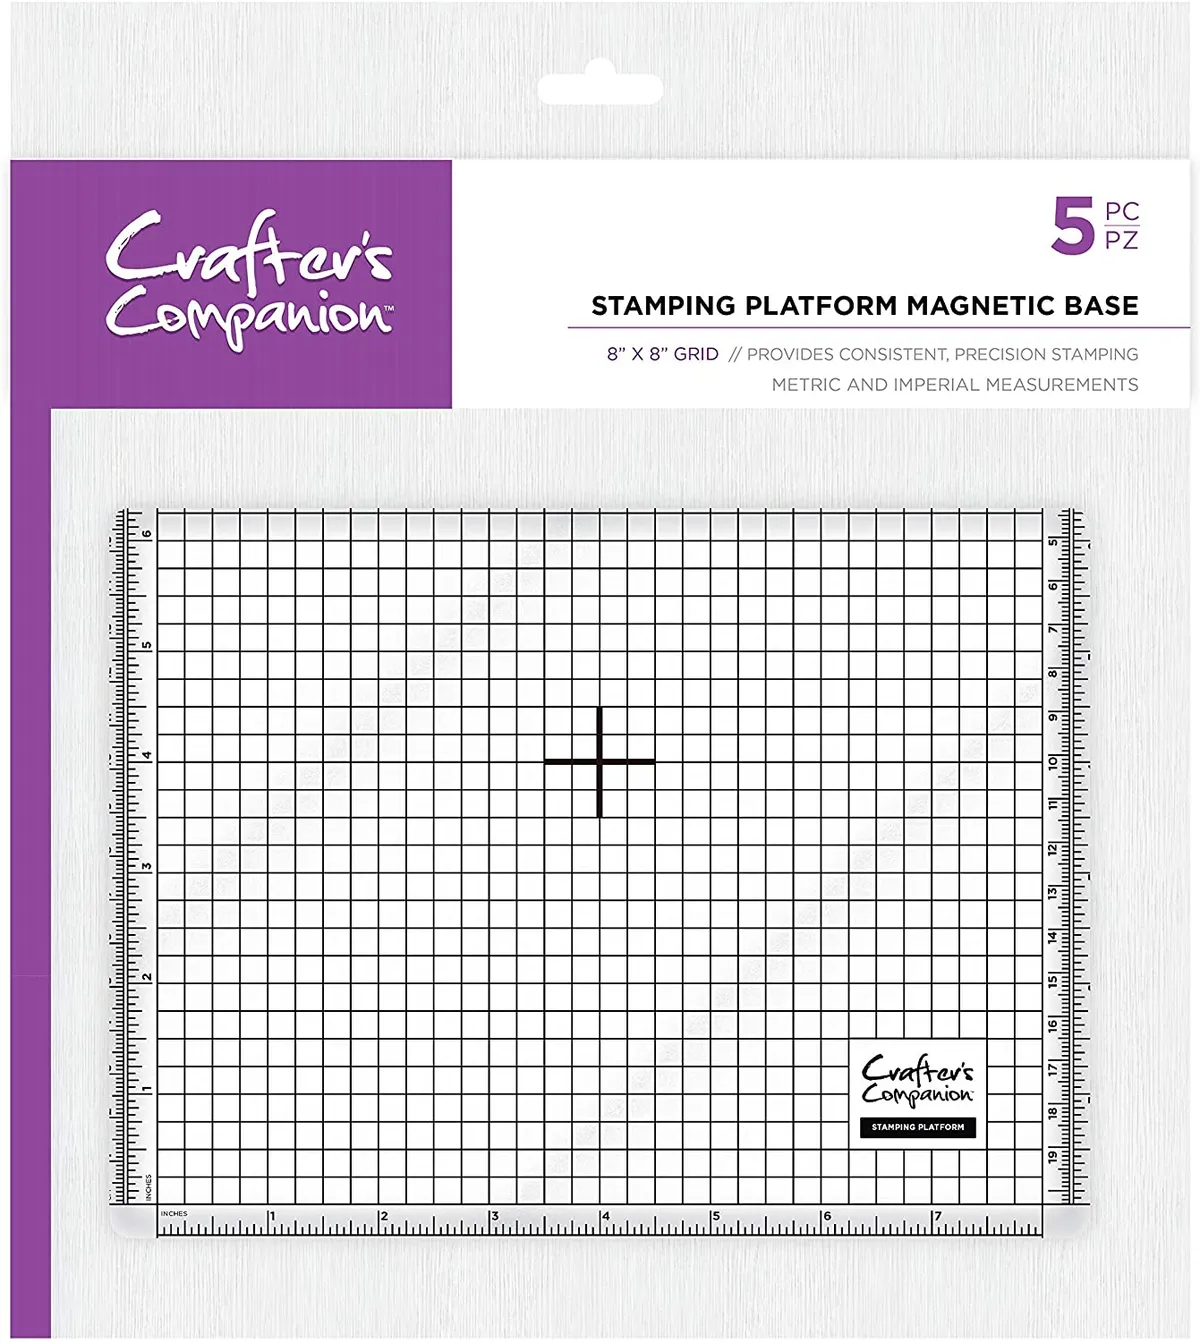 Best stamping platforms - Crafter's Companion 8 x 8 Stamping Platform Magnetic Base